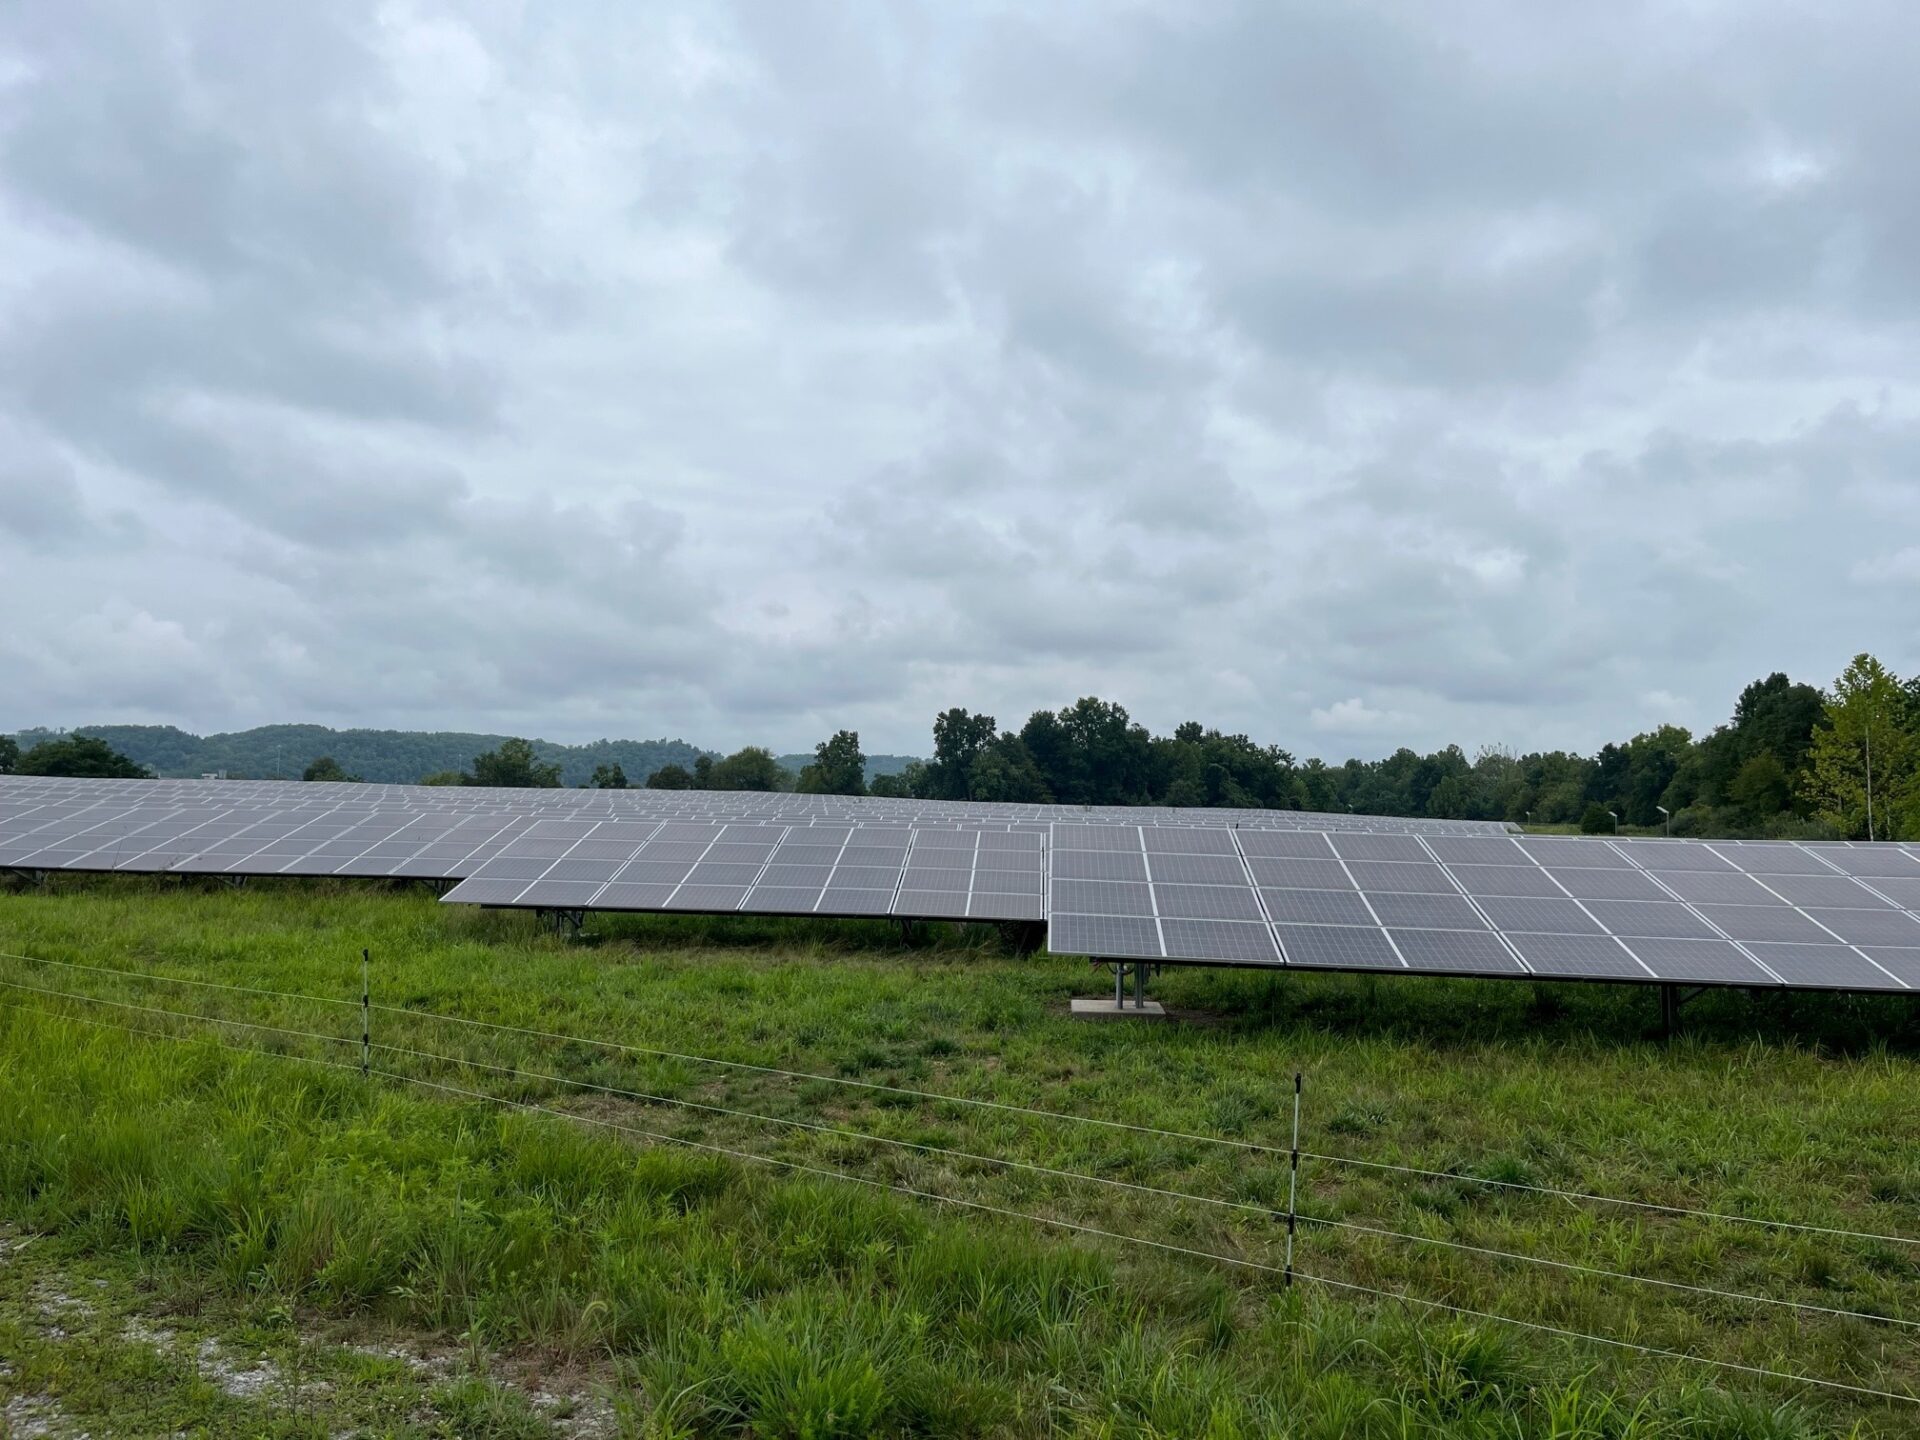 PSC Approves 100-Megawatt Solar Farm In Mason County